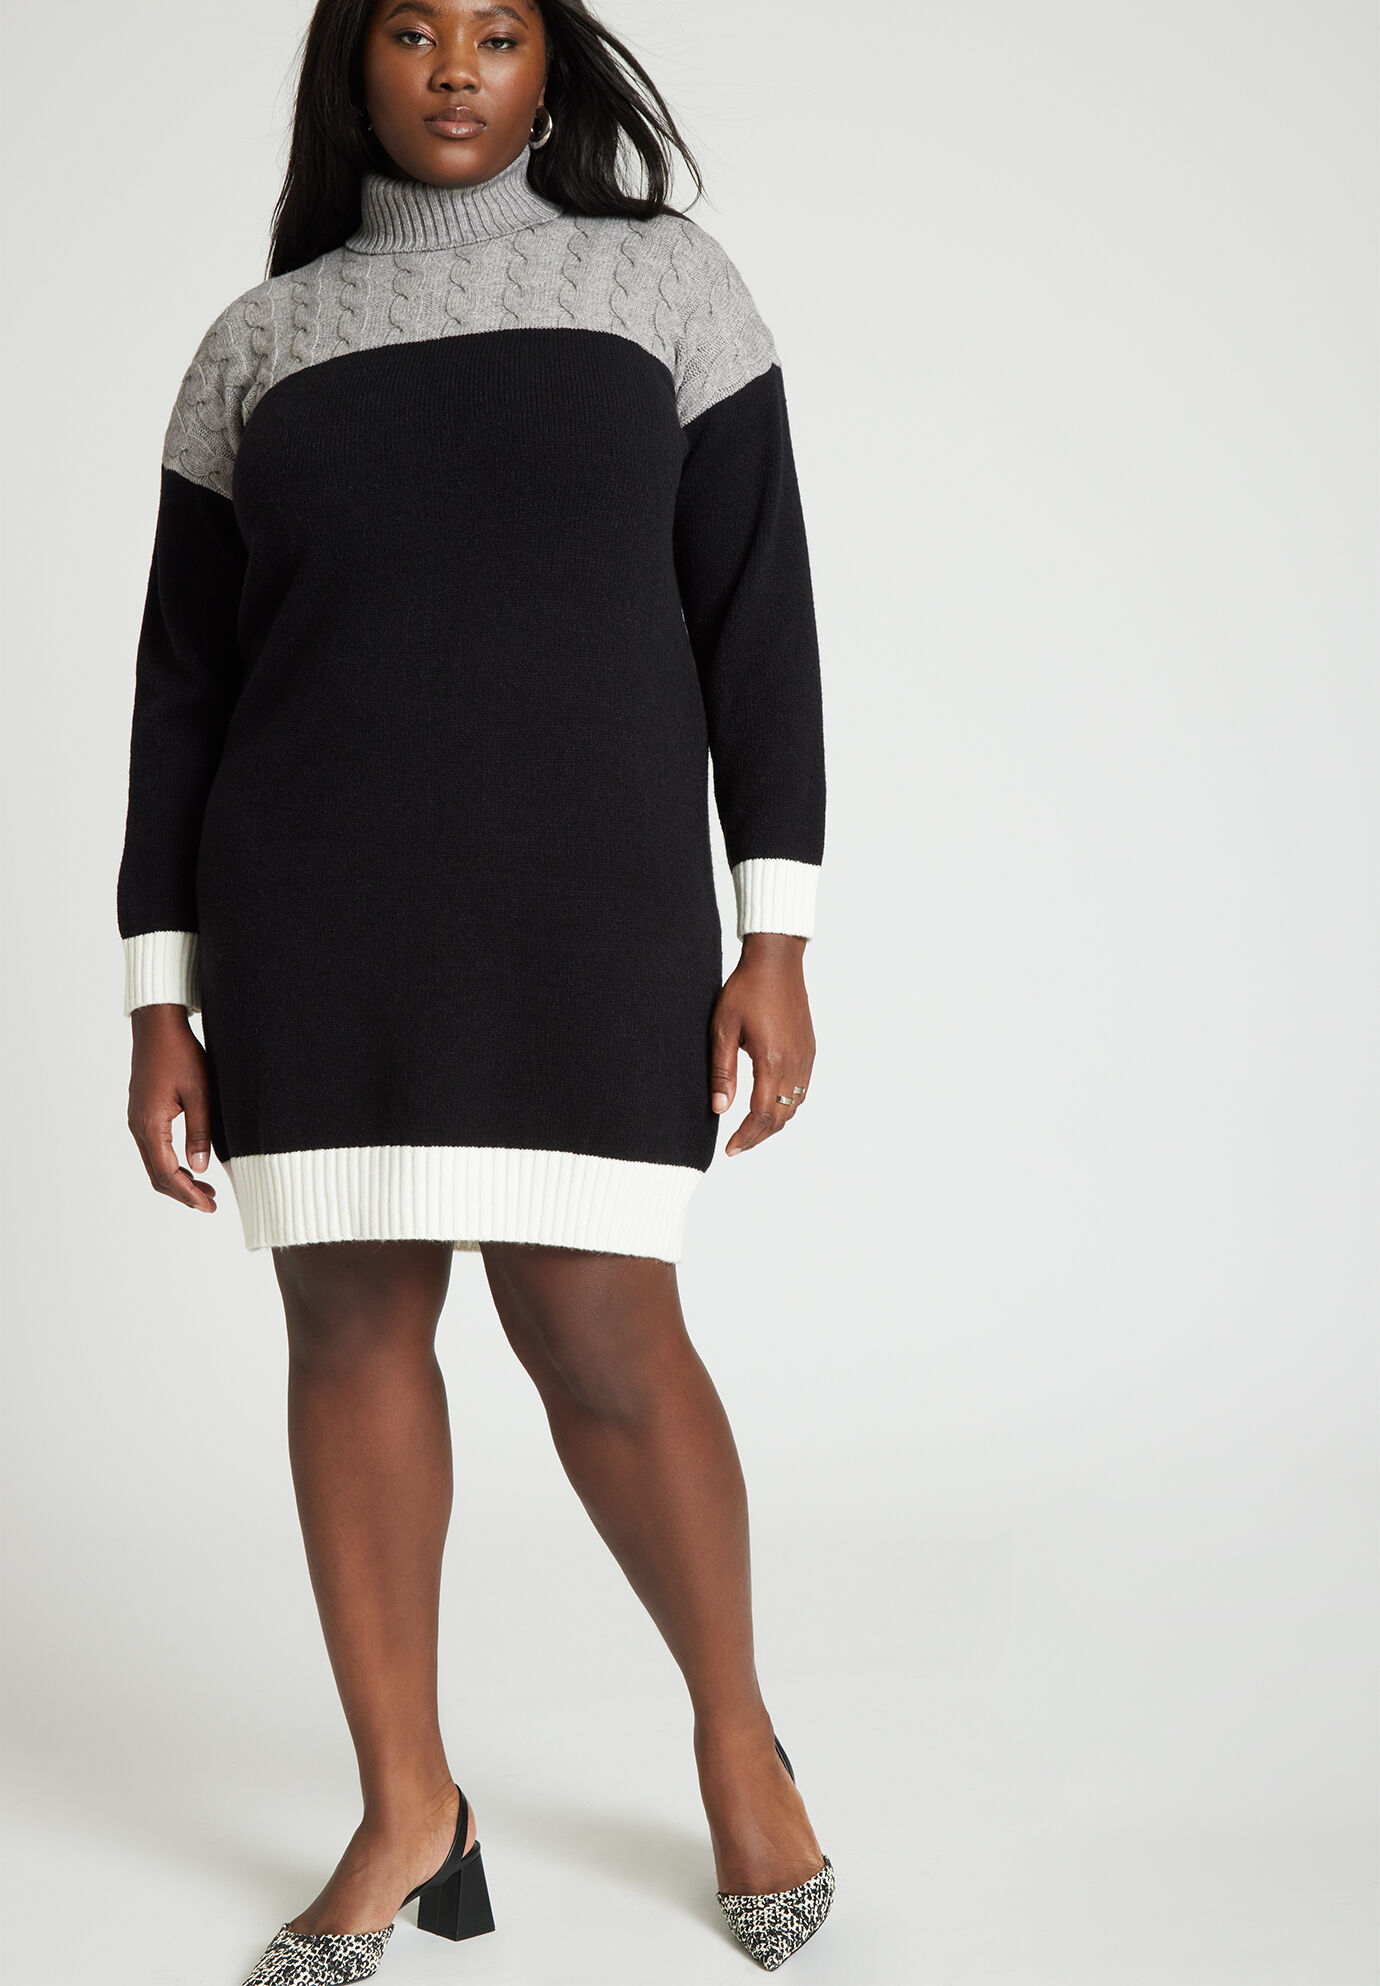 Collared Turtleneck Sweater Dress by Eloquii